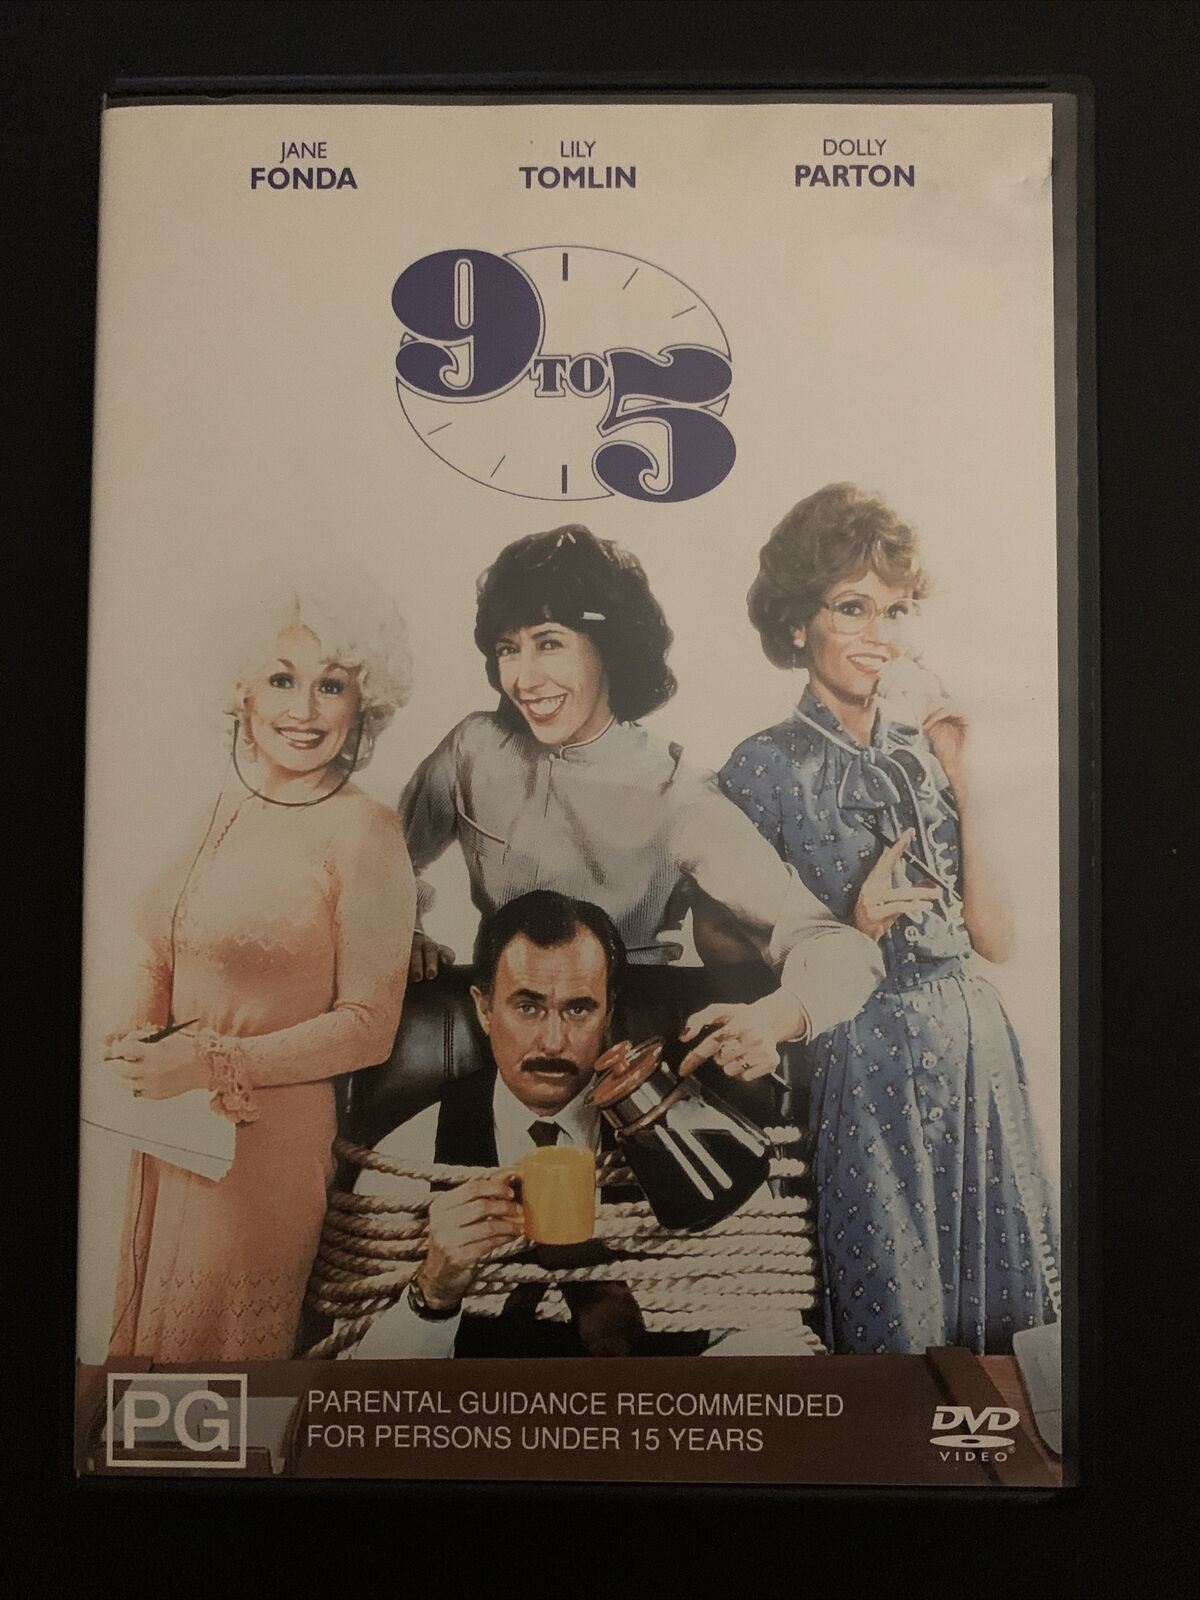 9 To 5 (DVD, 1980) Dolly Parton, Jane Fonda, Lily Tomlin - Region 2,4